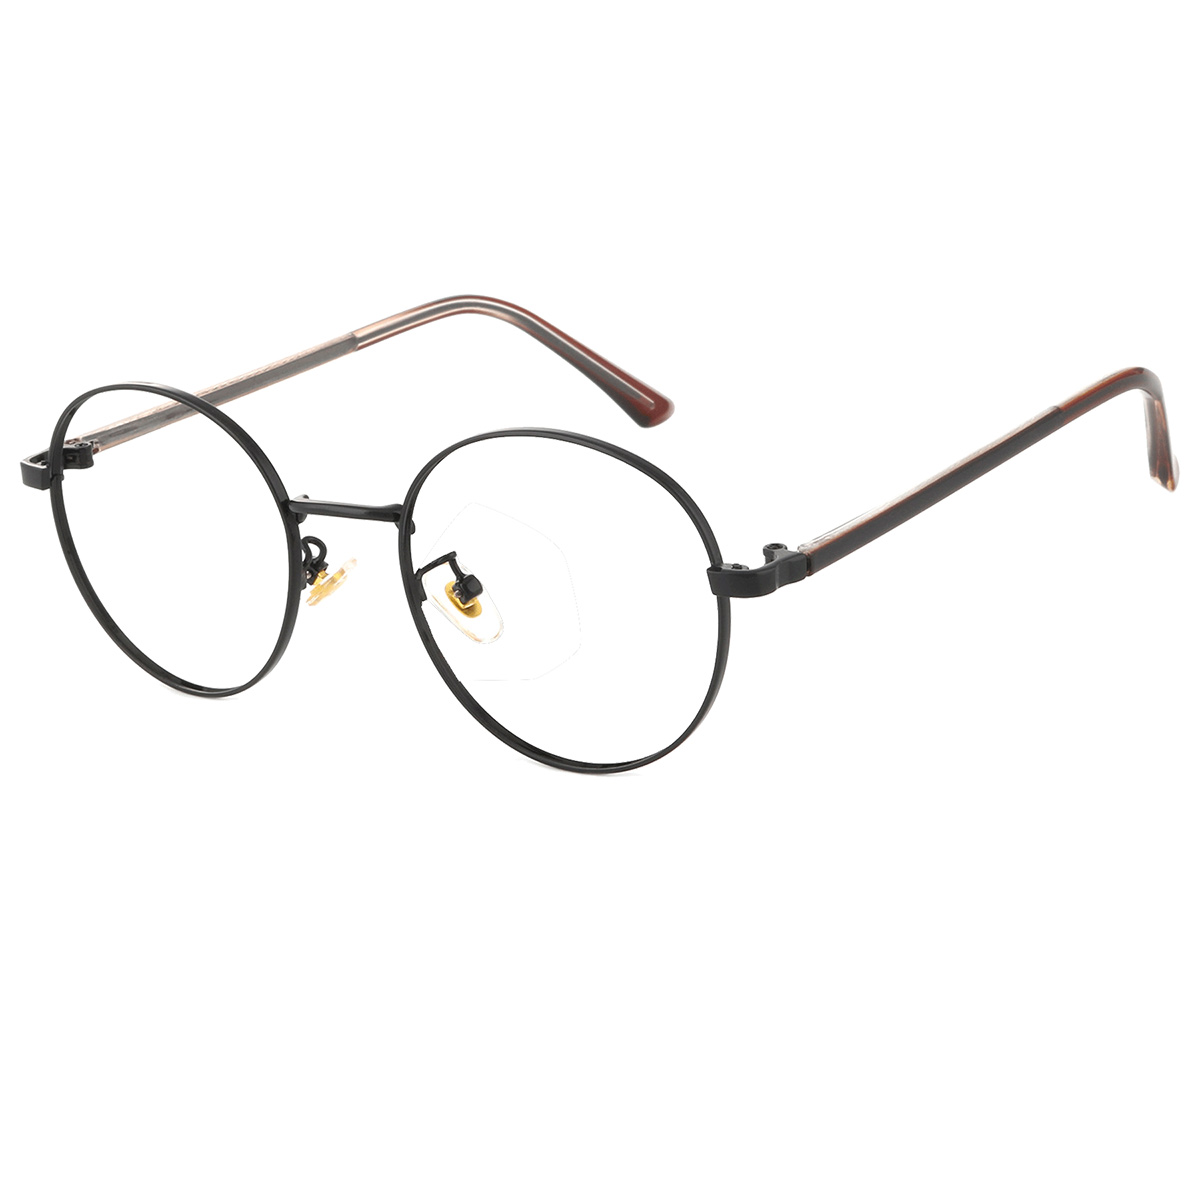 Lycus - Round Black /brown Reading Glasses for Men & Women